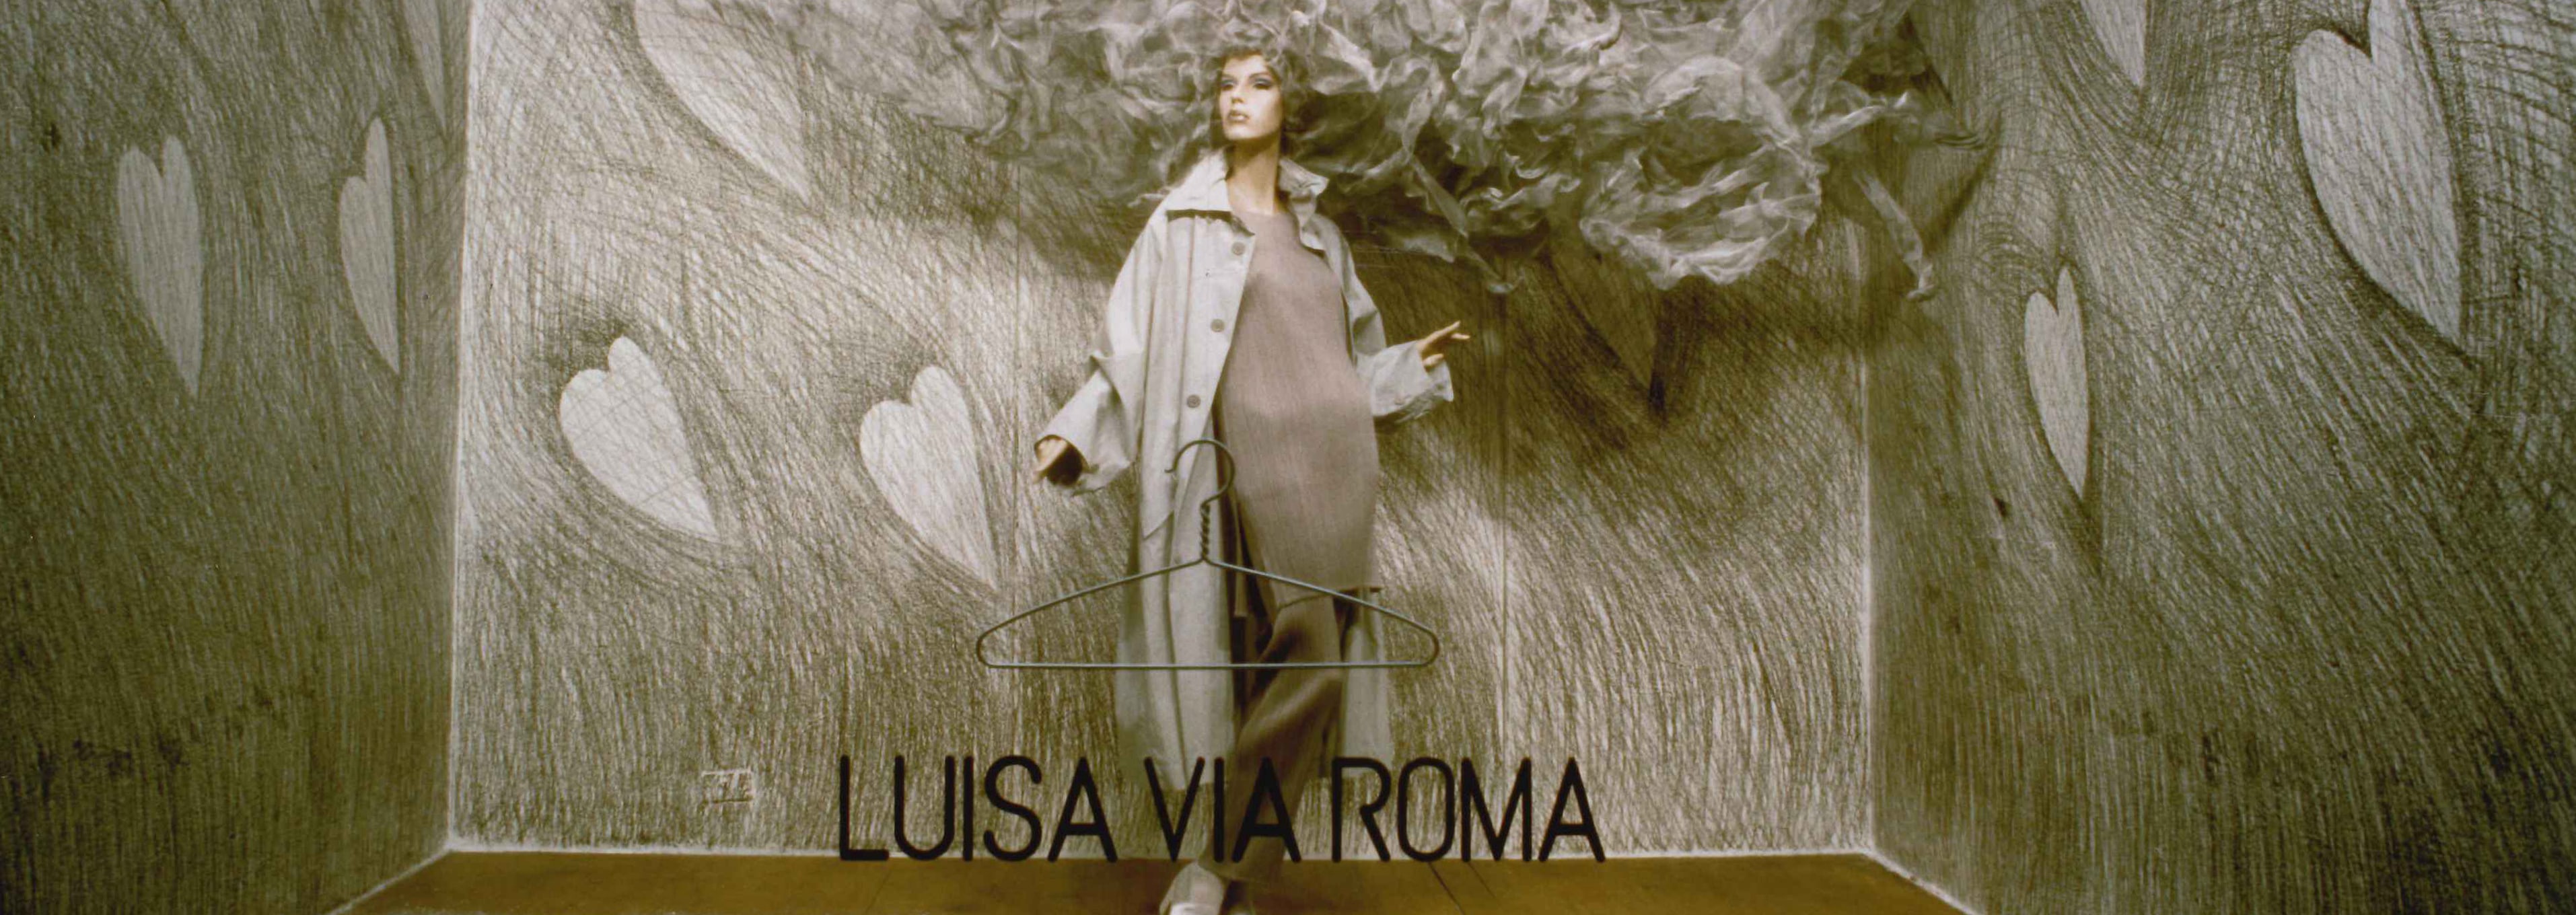 Lorenzo Gemma, le talent qui se cache derrière les vitrines de LuisaViaRoma